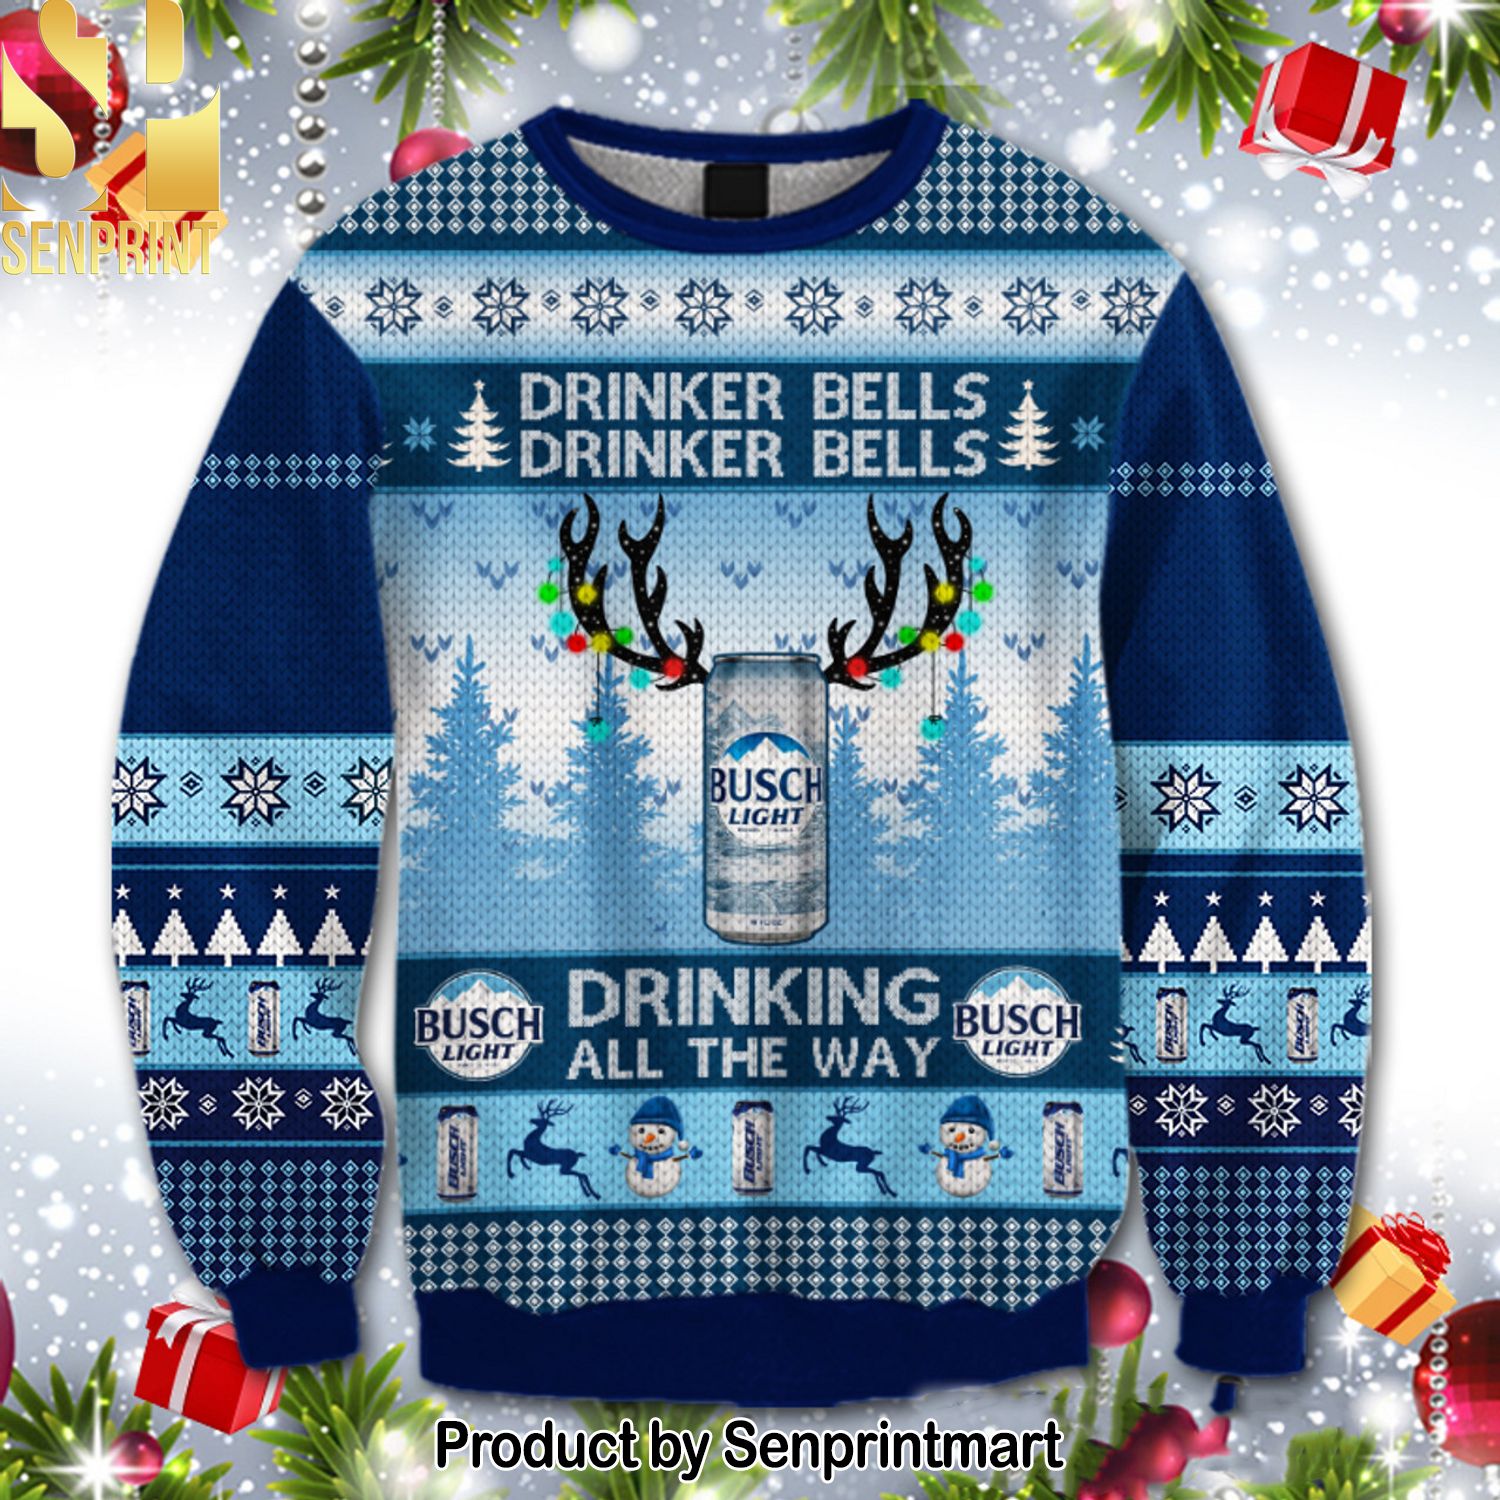 Busch Light Drinker Bells Knitting Pattern Ugly Christmas Sweater